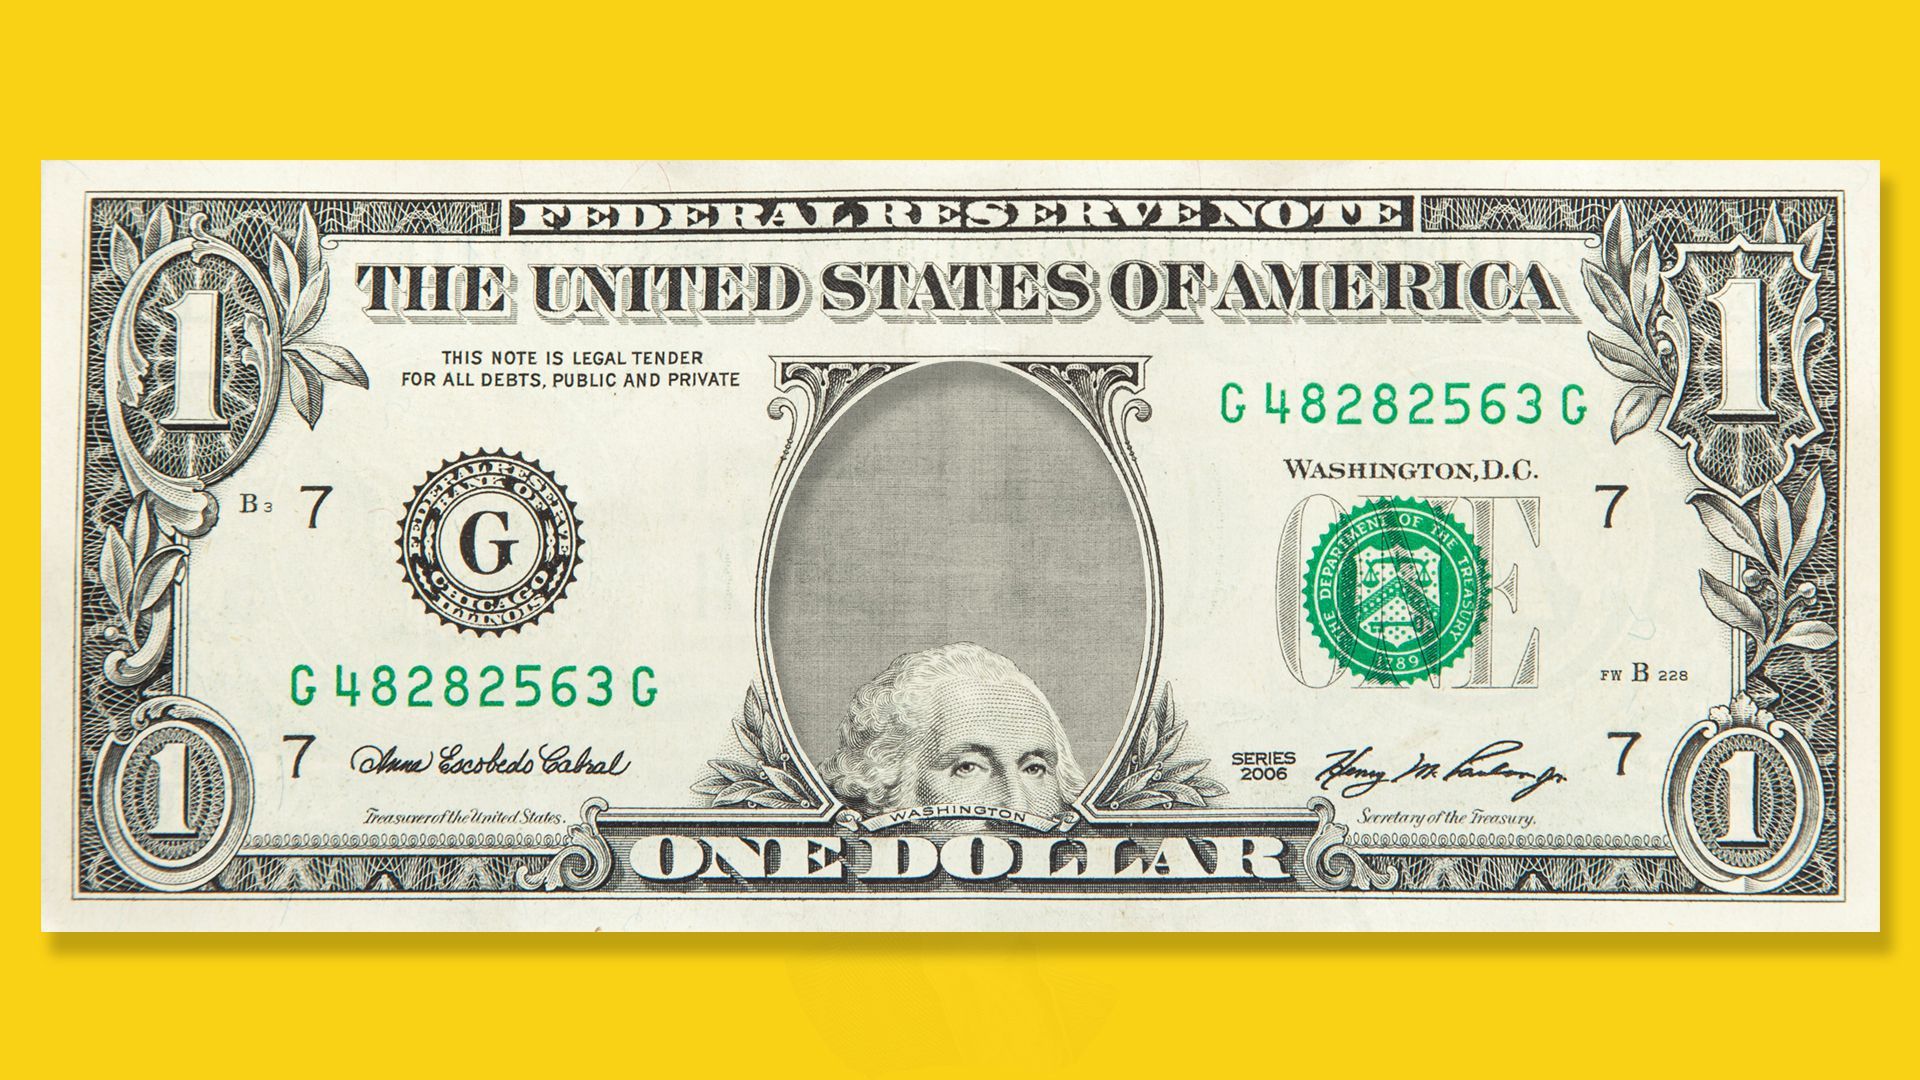 Illustration of ben franklin peaking out over a dollar bill